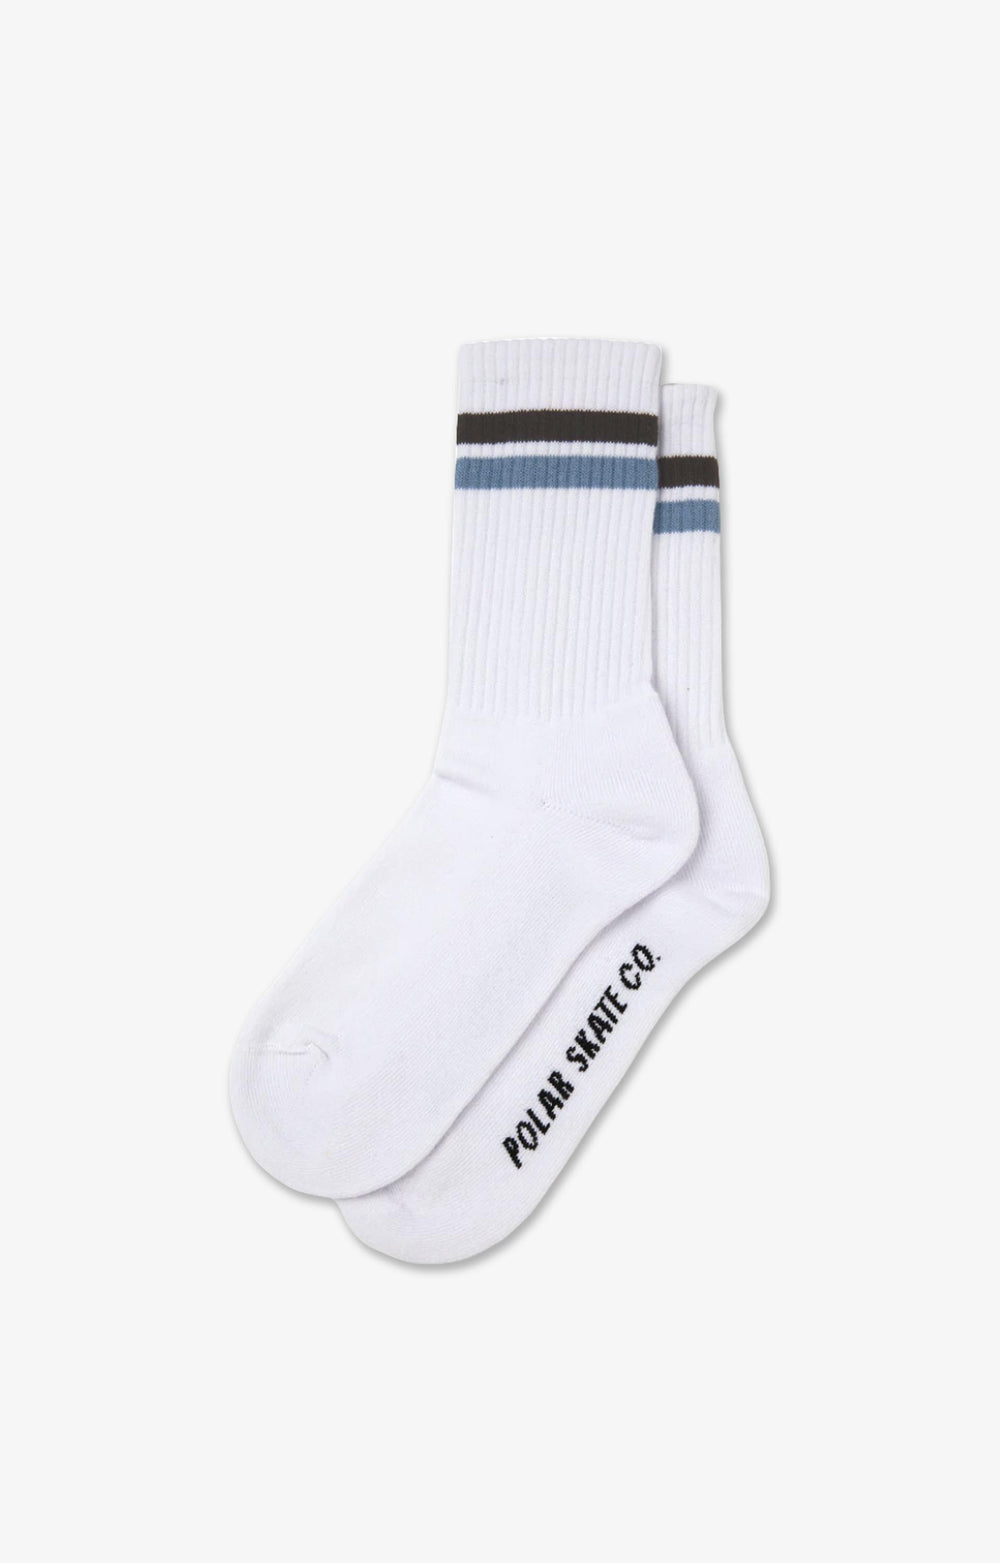 Polar Skate Co Stripe Socks, White/Brown/Blue